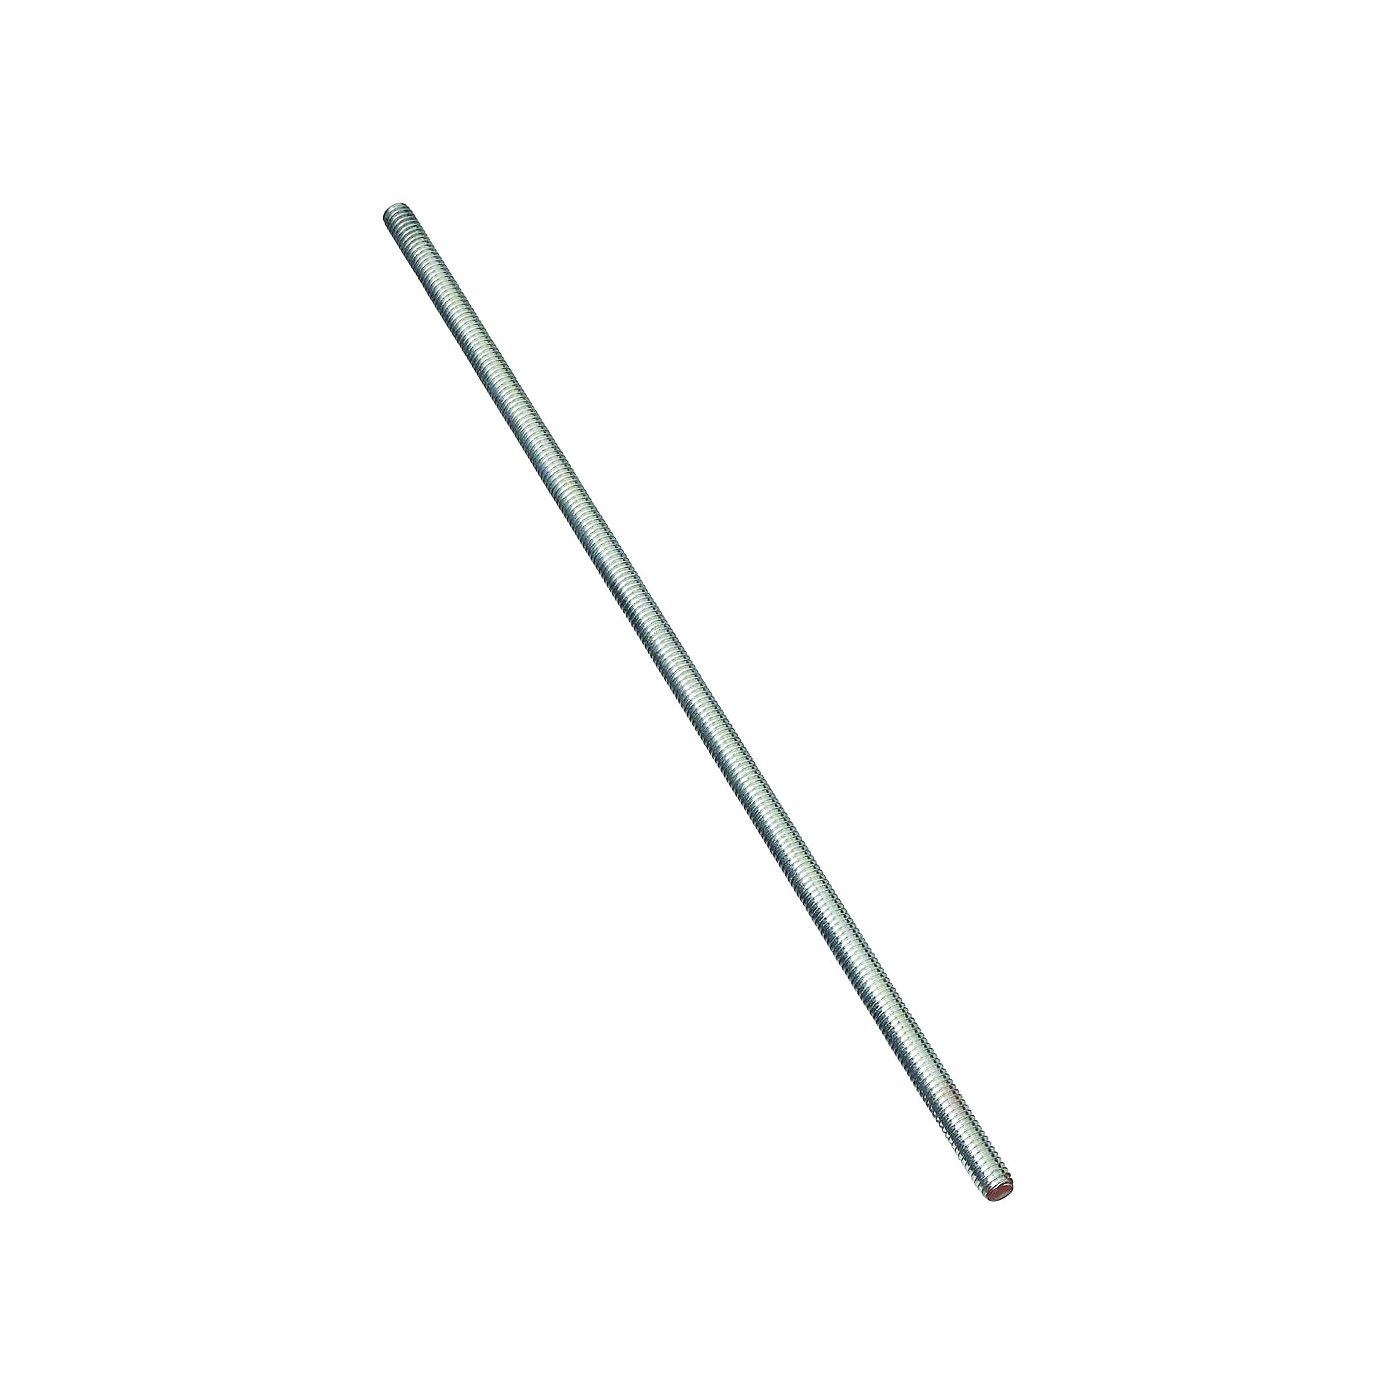 N179-424 Threaded Rod, 5/16-18 Thread, 24 in L, A Grade, Steel, Zinc, UNC Thread